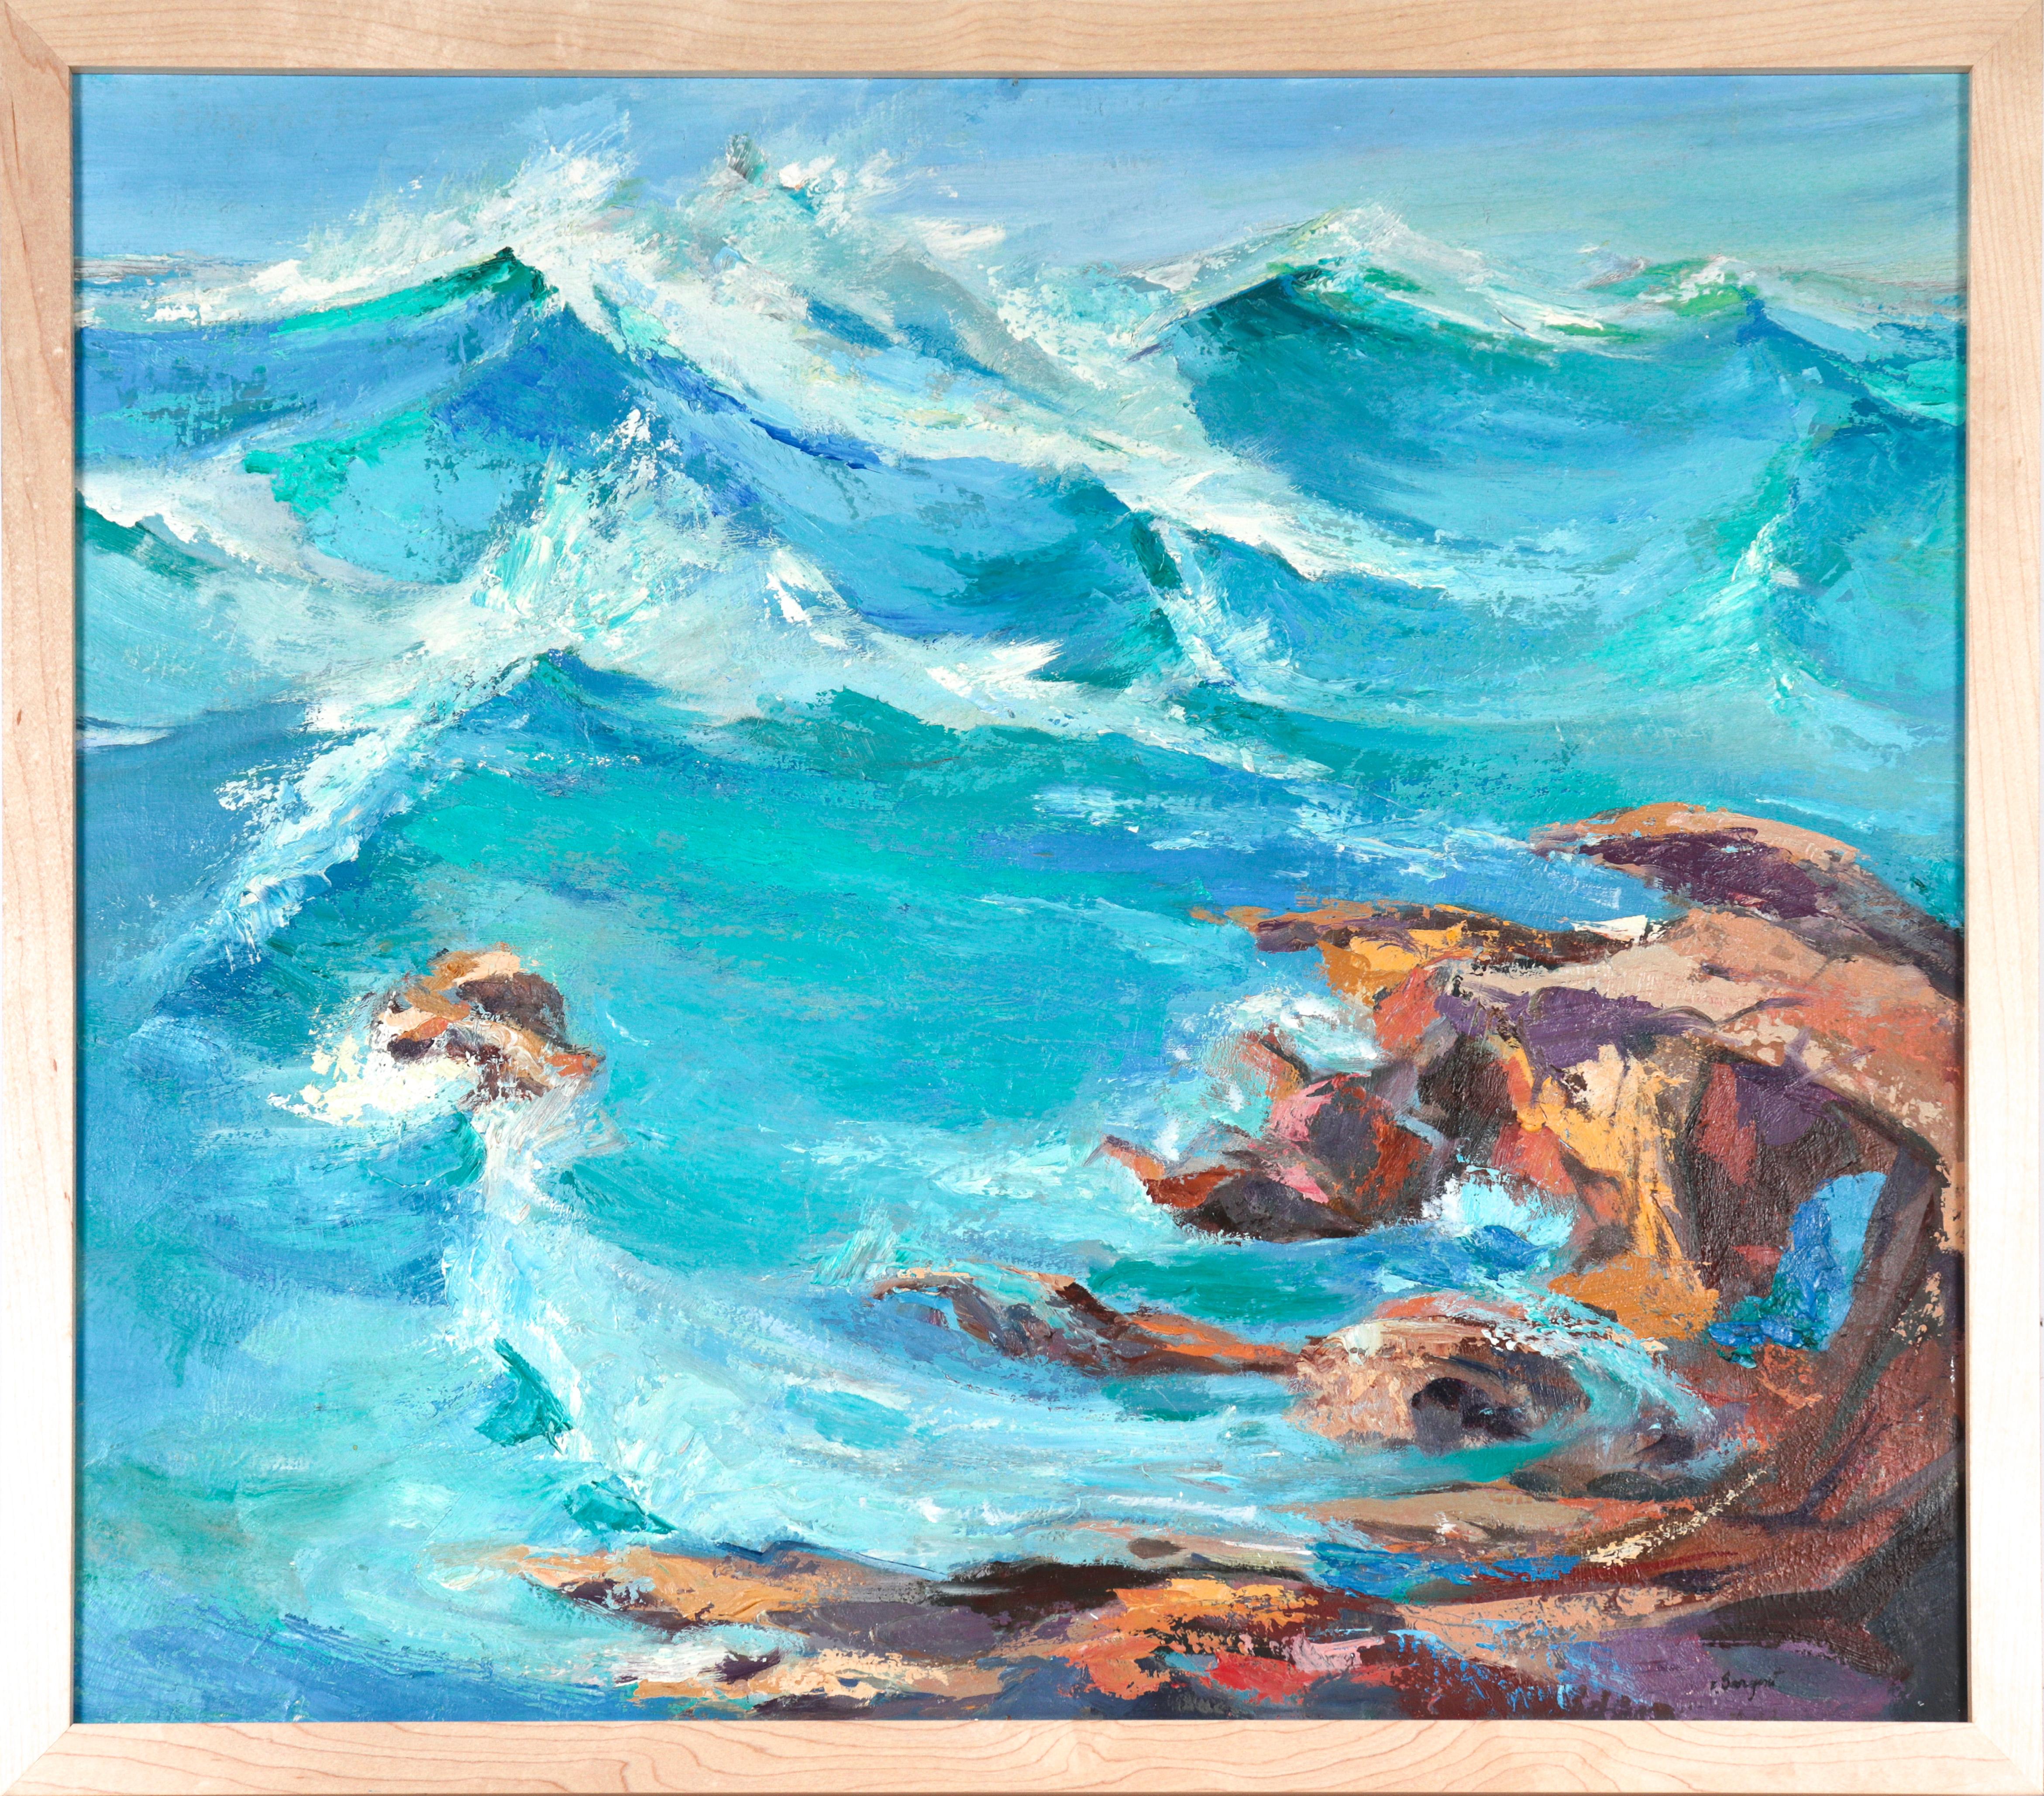 Freeman Sargent Landscape Painting - "Marine" 20th Century Oil